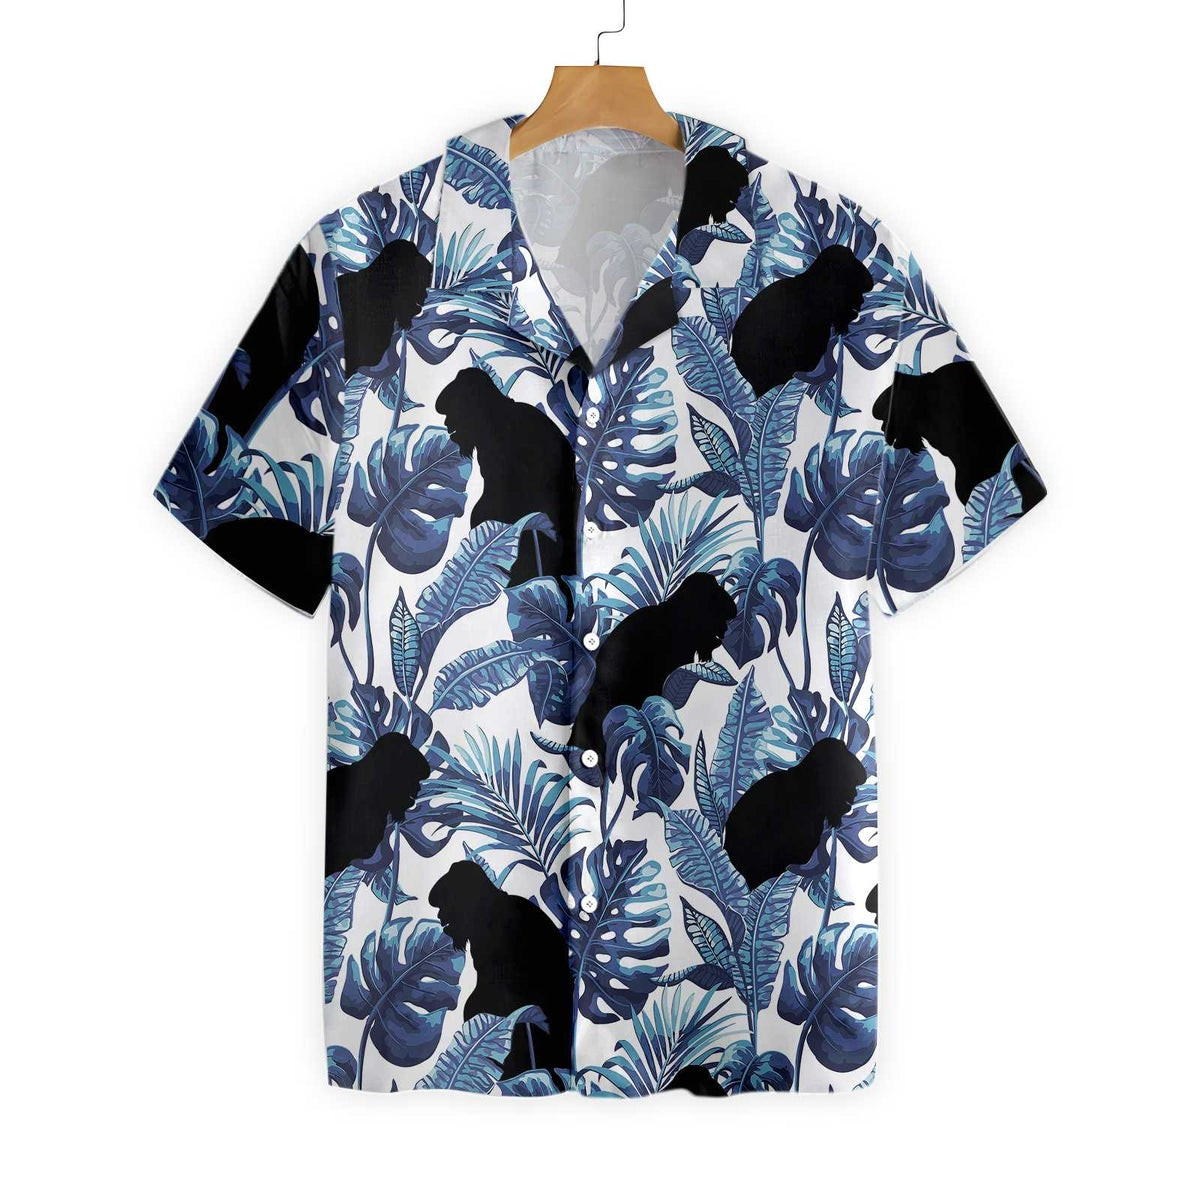 Bigfoot  The Blue Leaves Bigfoot Hawaiian Shirt White And Navy Blue Tropical Floral Bigfoot Shirt For Men